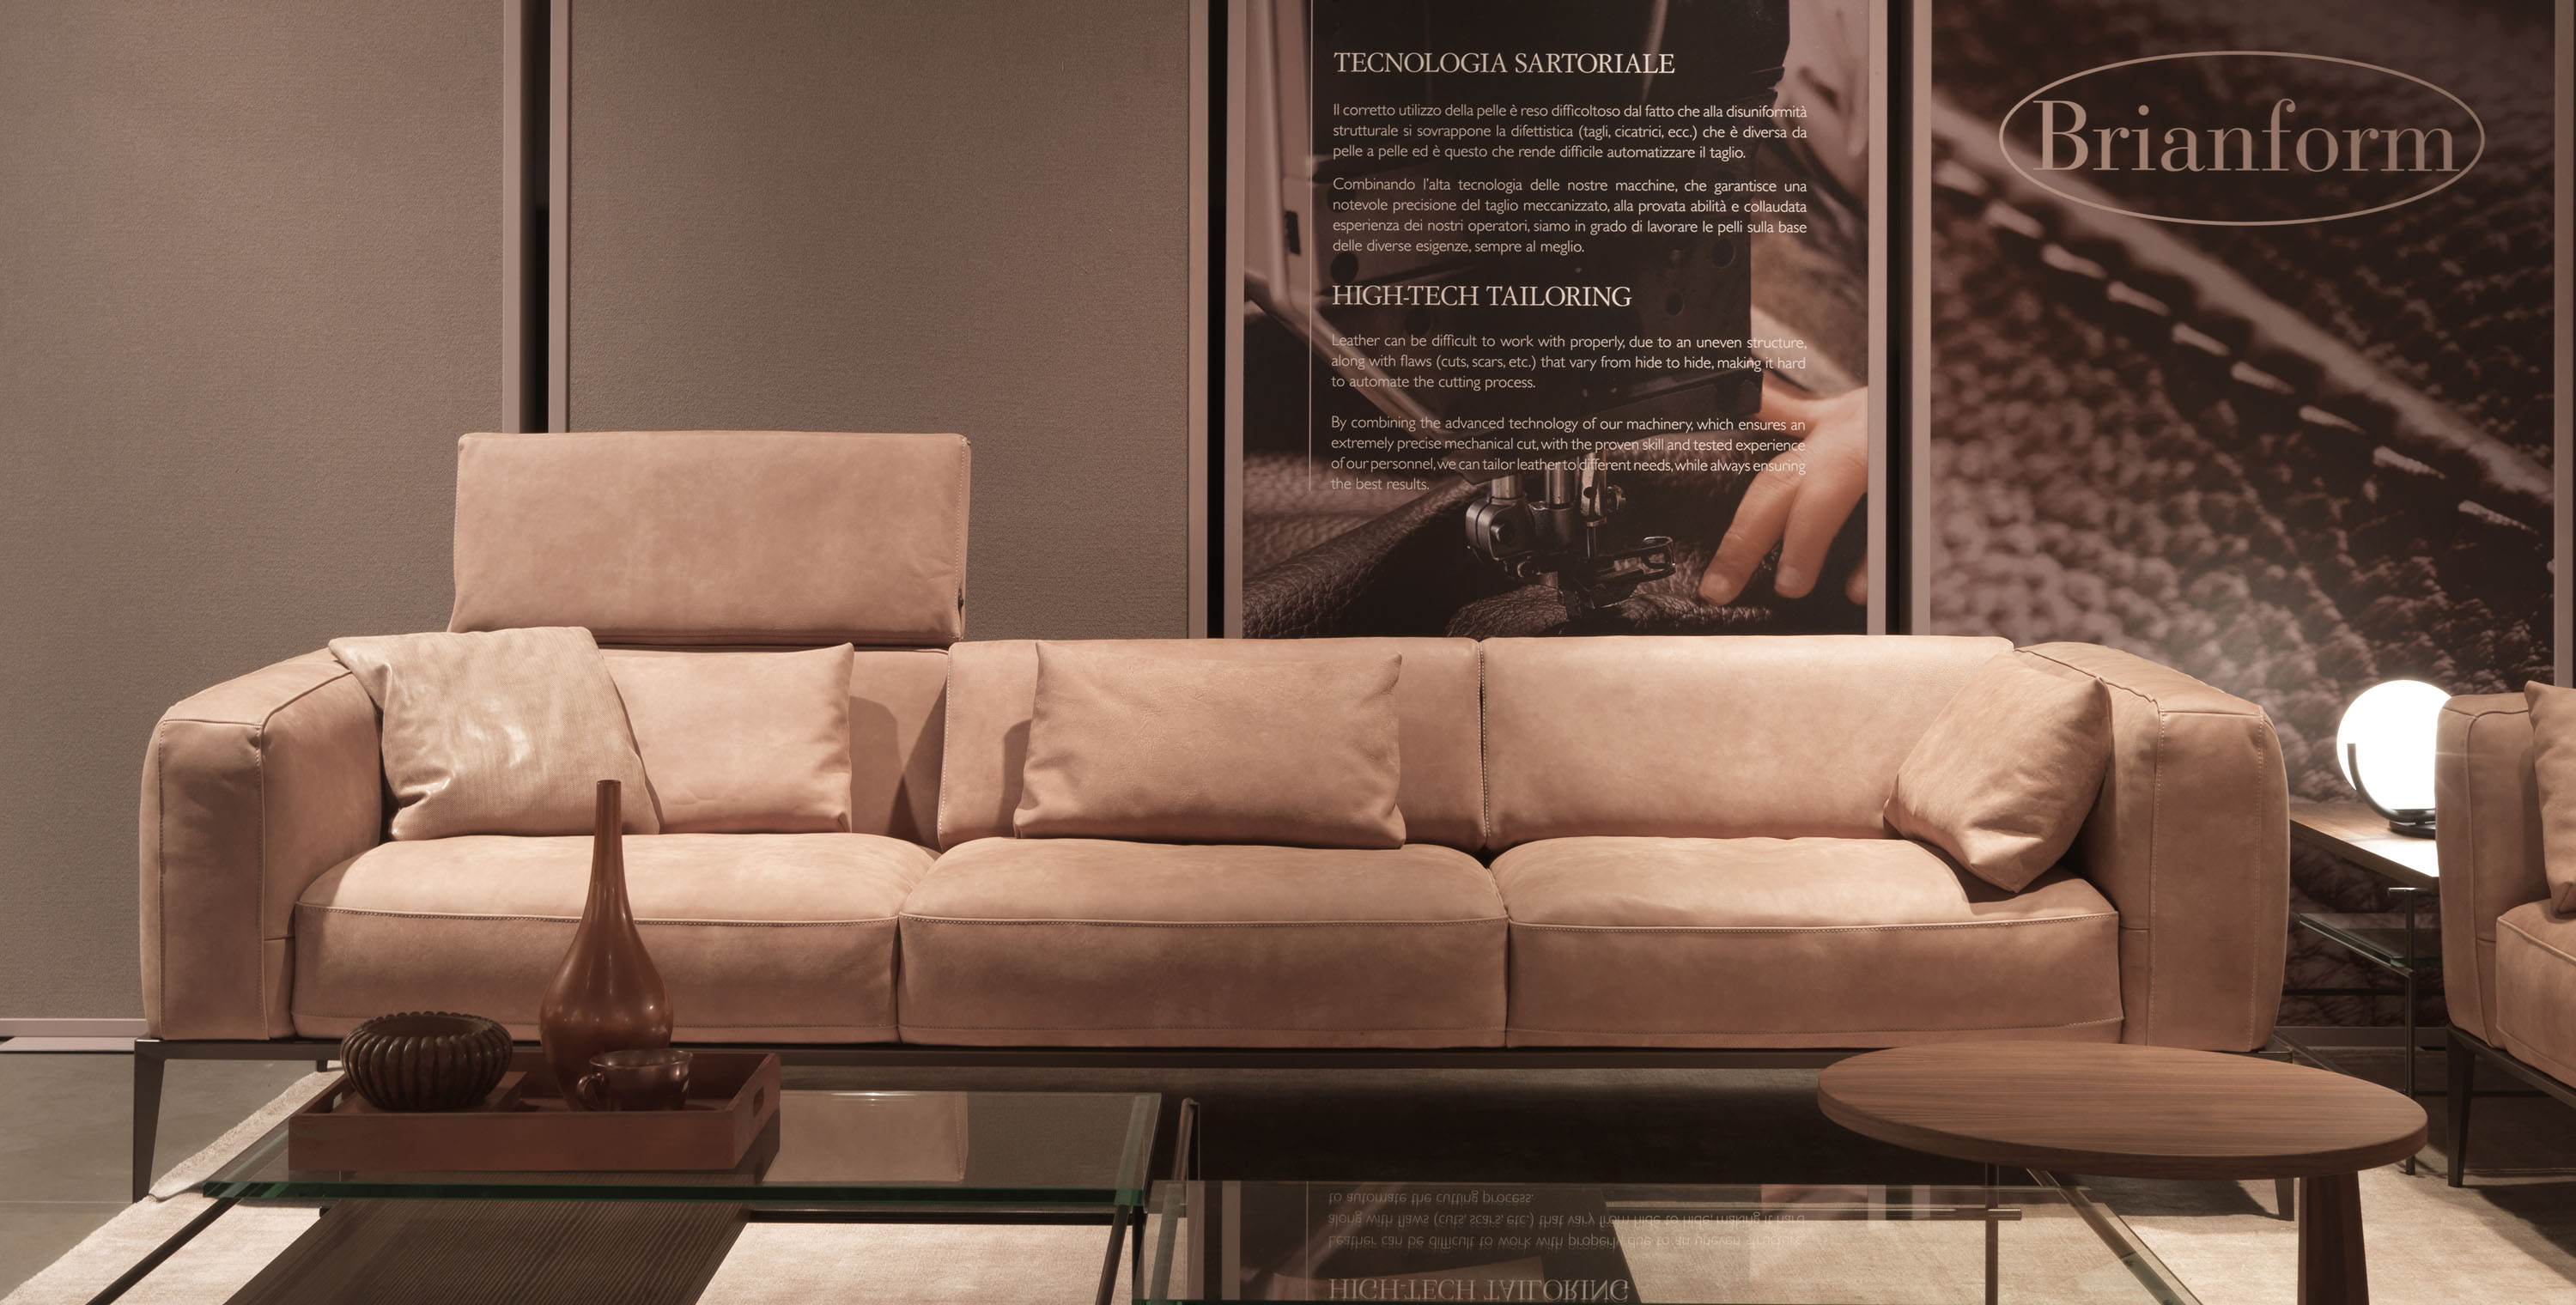 italian leather sofa jamaica queens ny